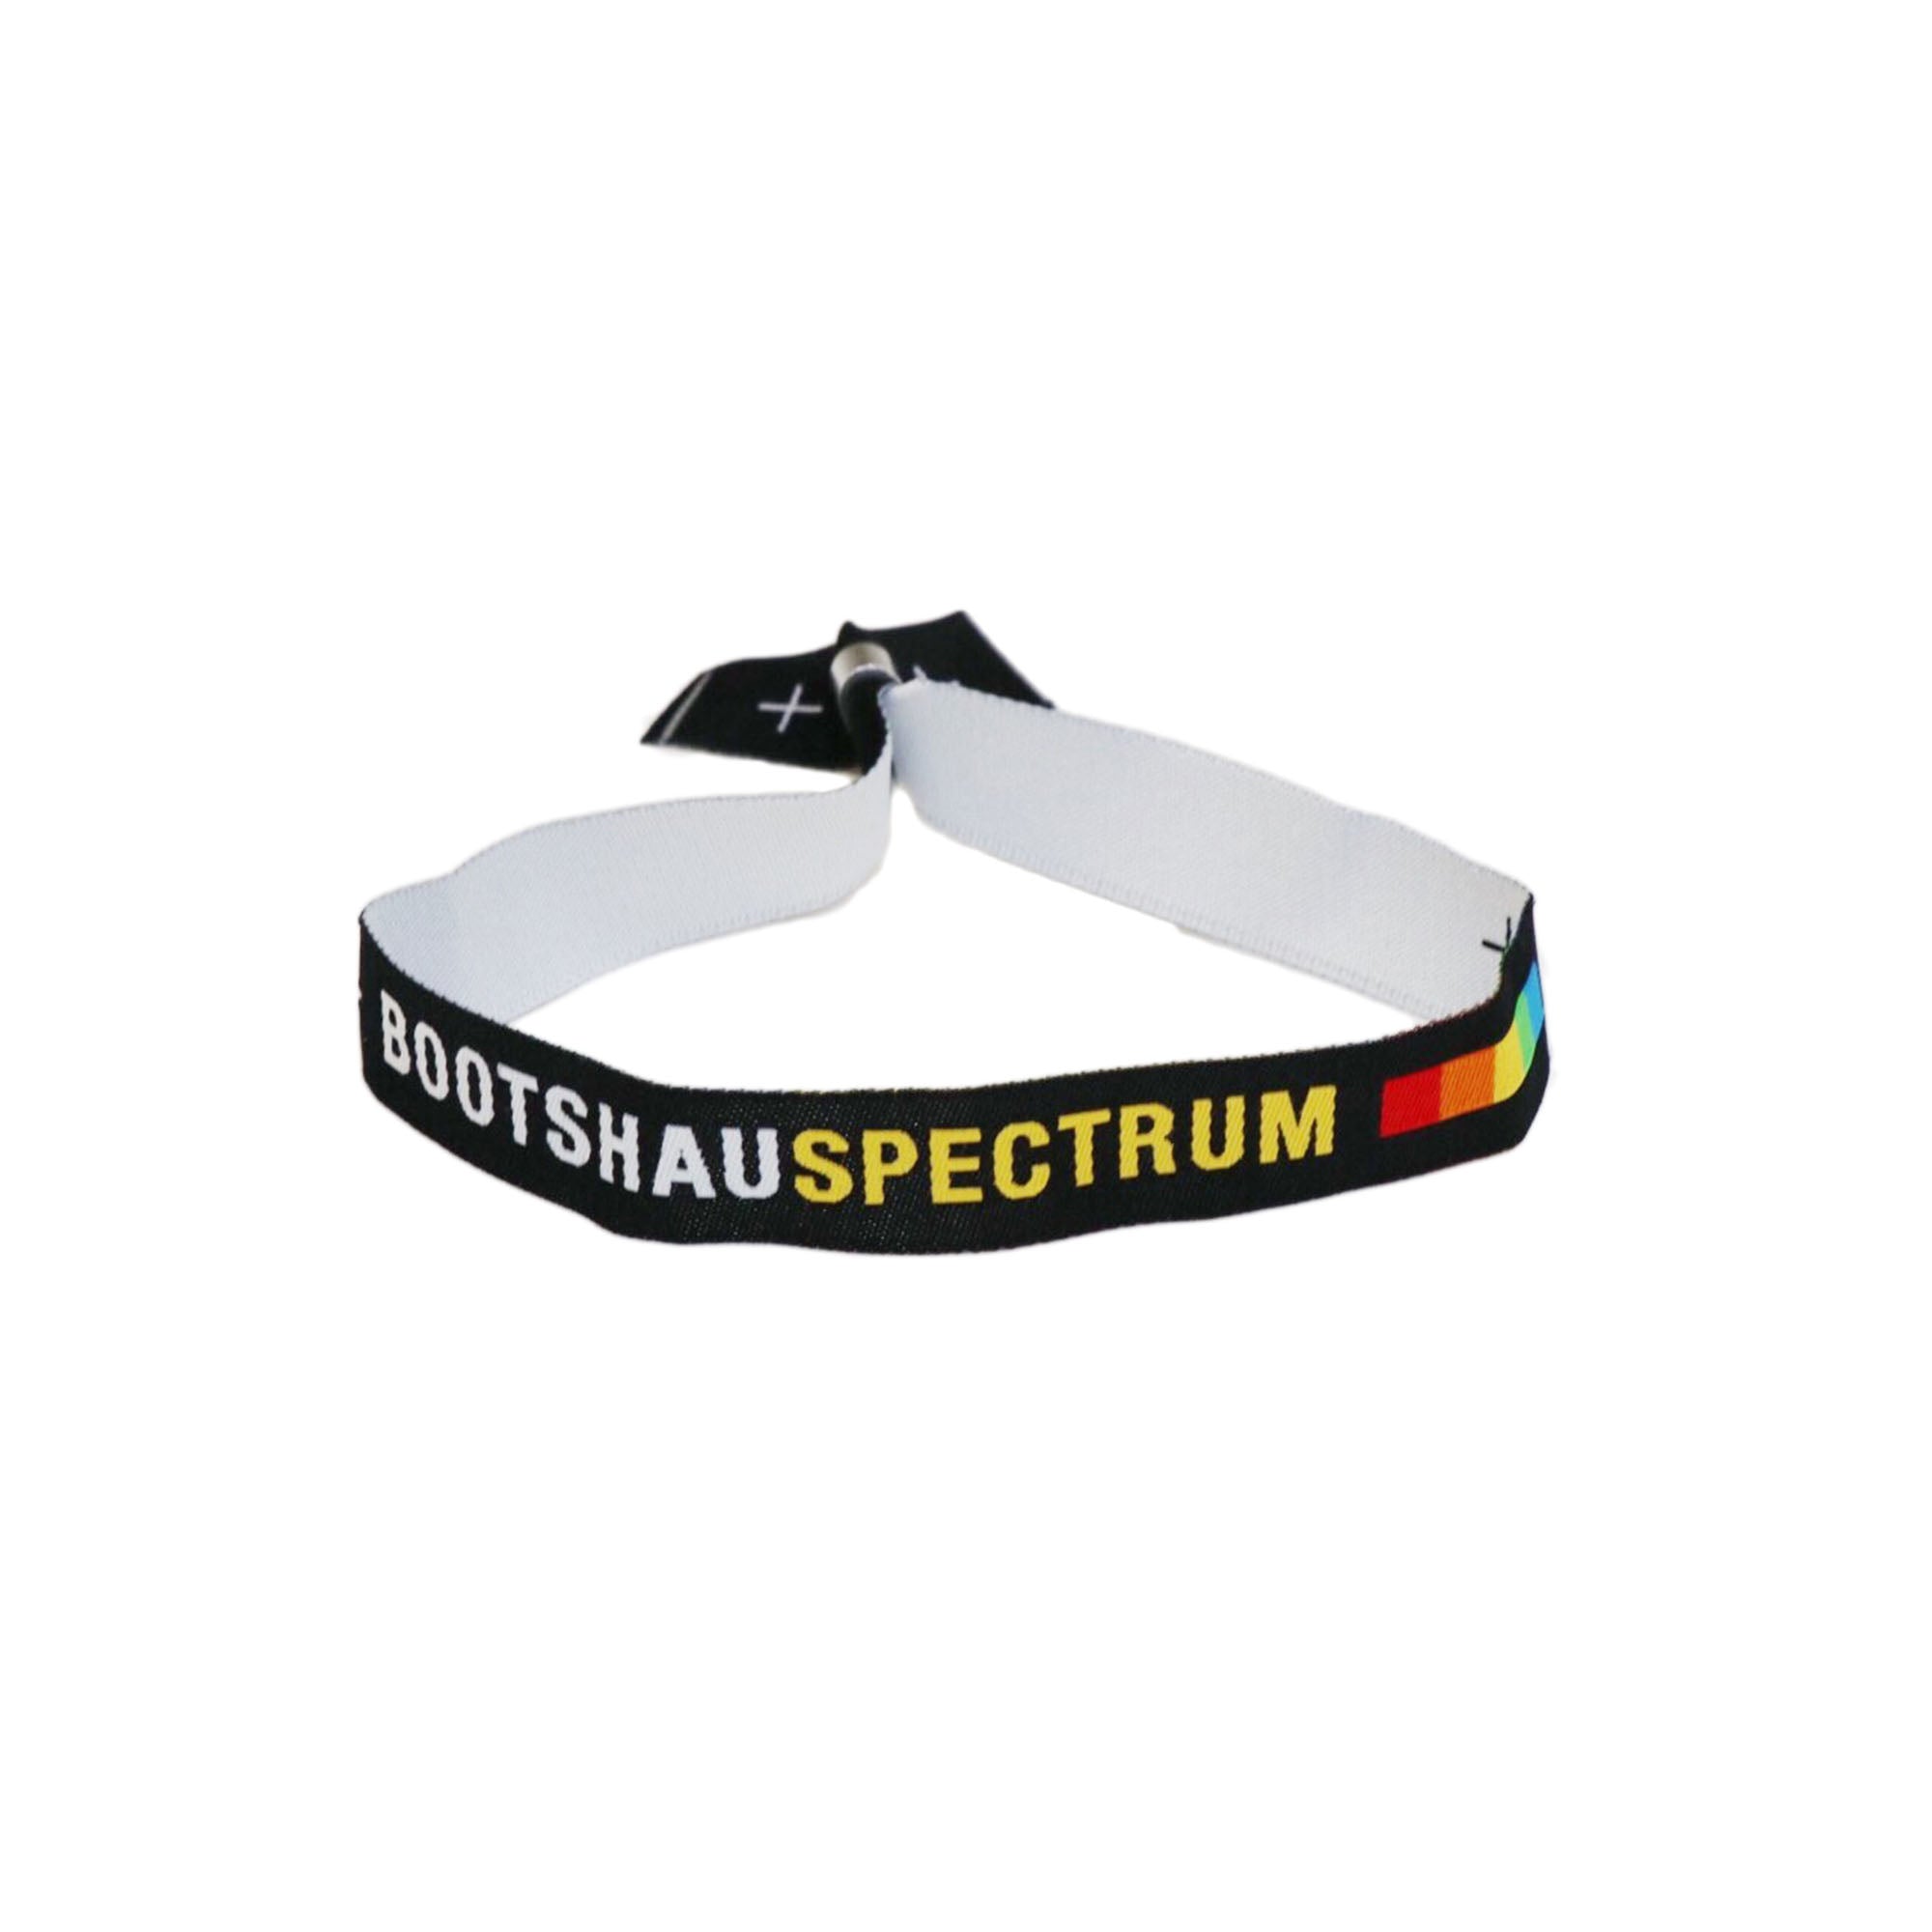 Bootshaus - Spectrum Wristband